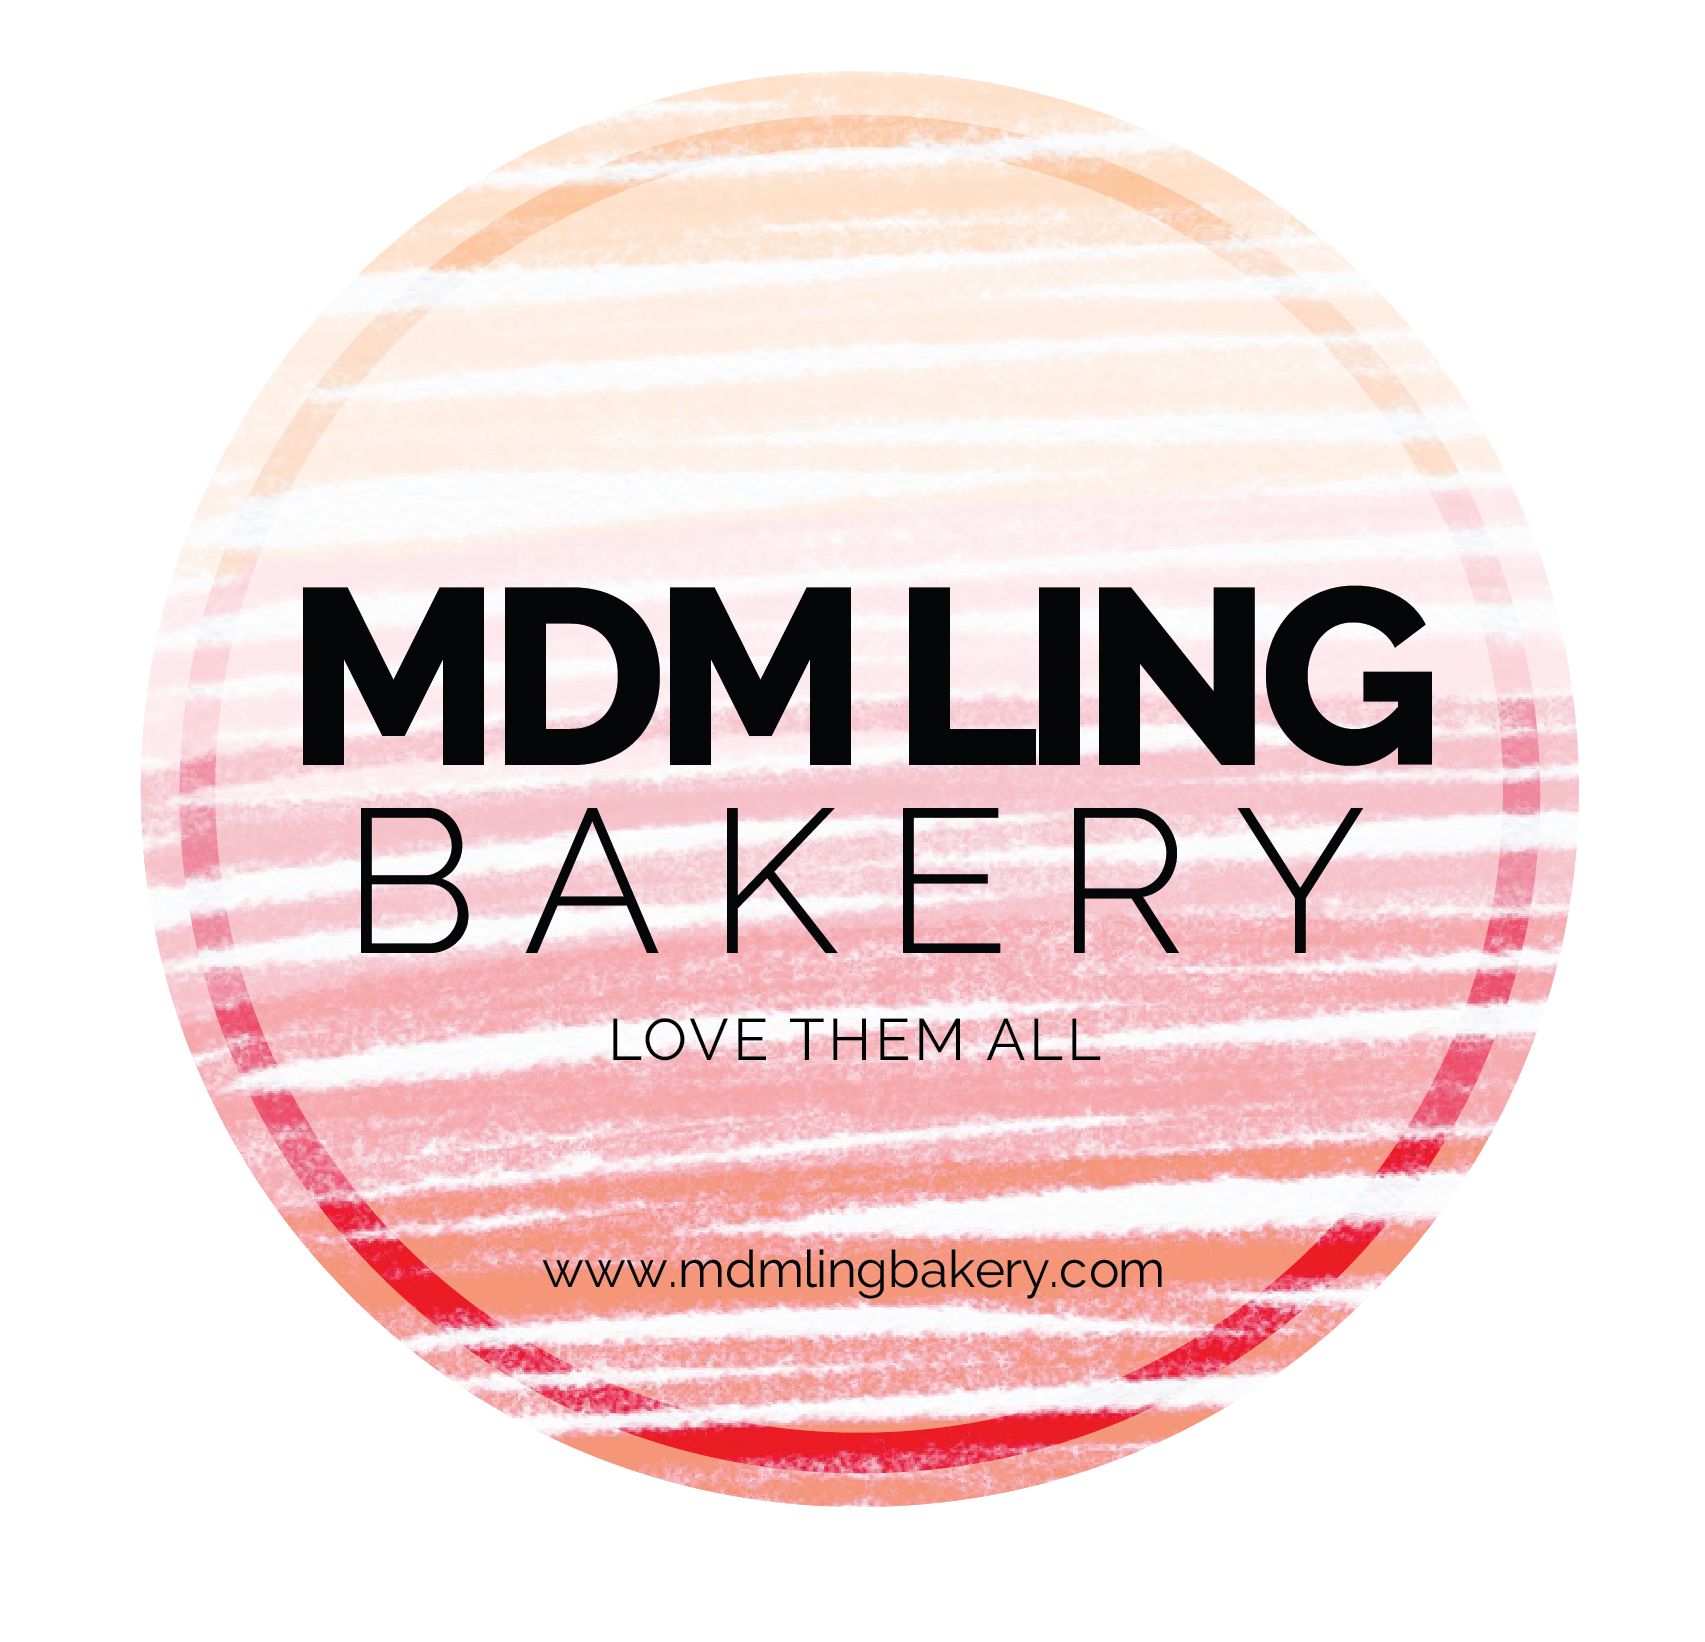 mdm ling bakery logo